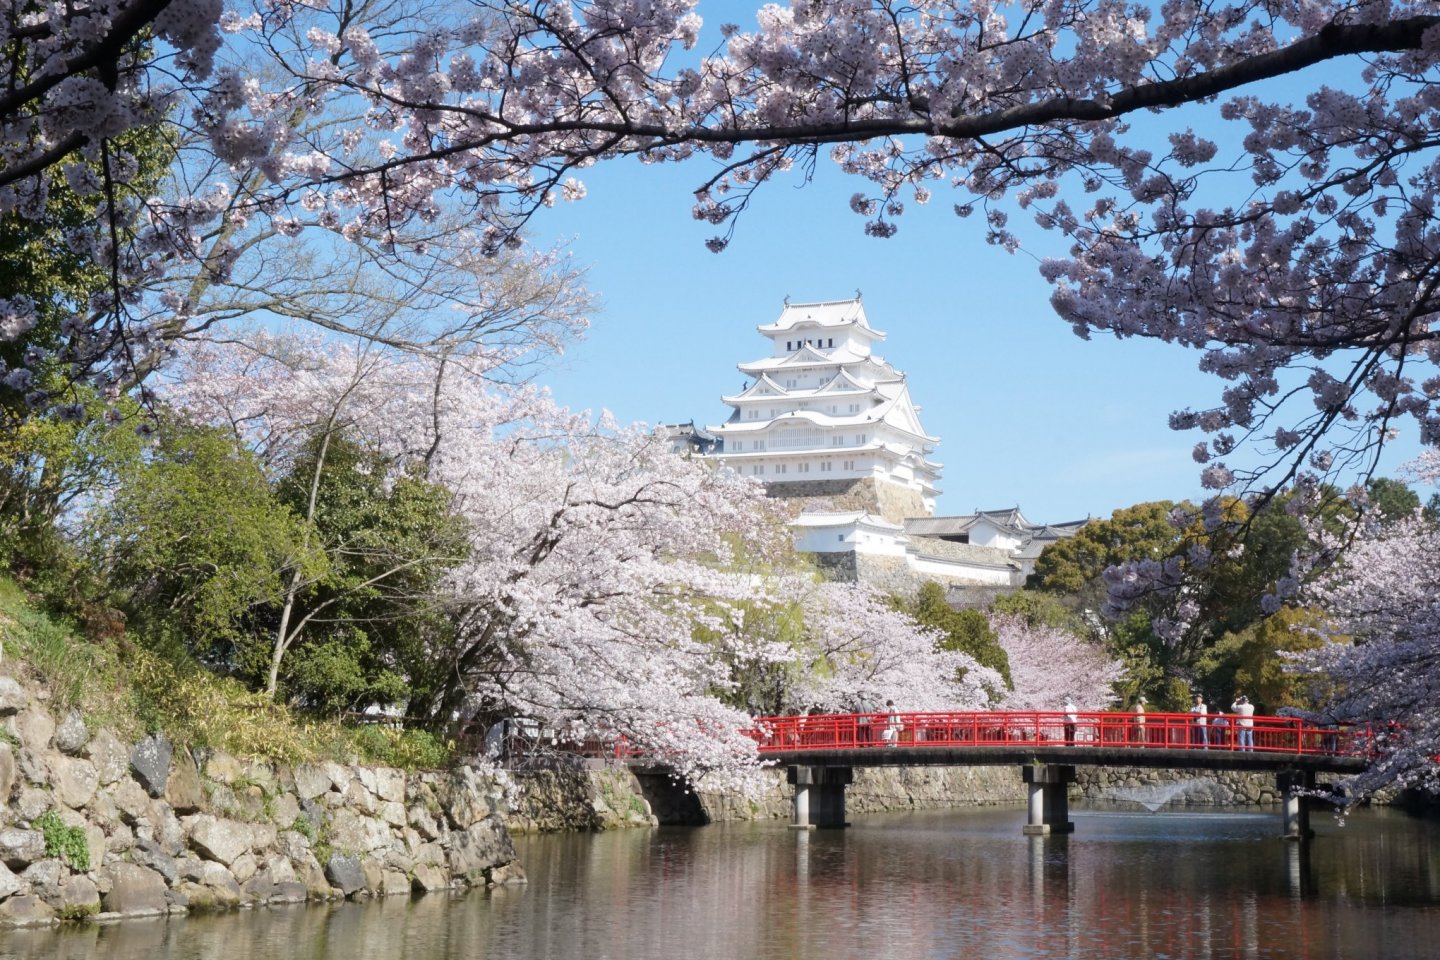 A quintessential springtime scene at Himeji Castle